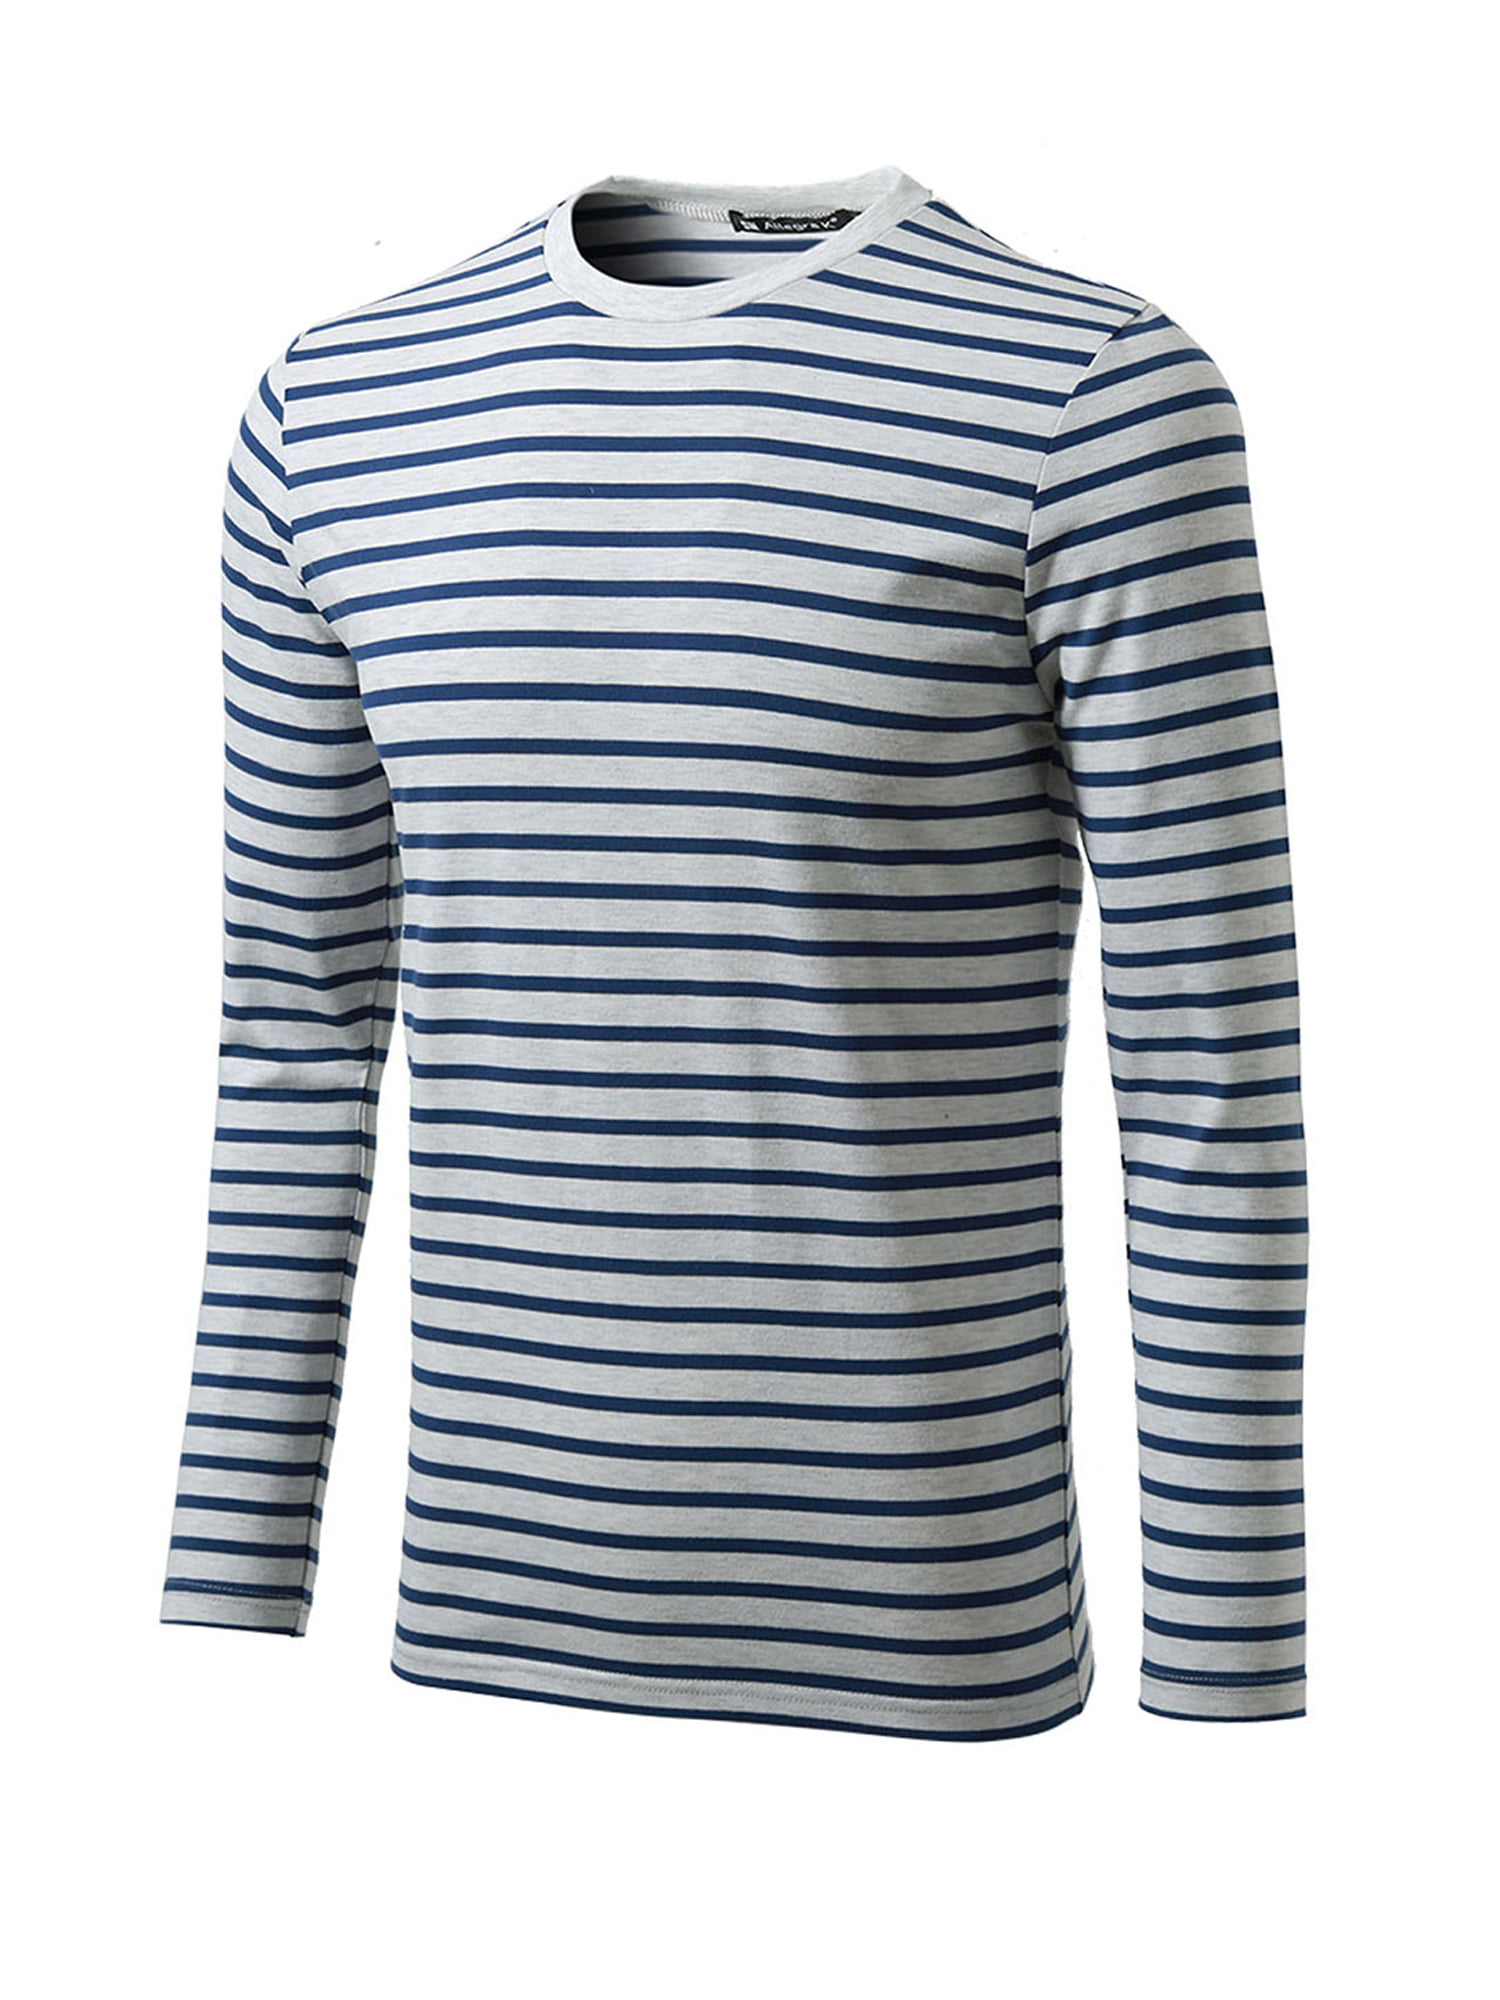 Unique Bargains - Men's Pullover Top Crew Neck Long Sleeve Striped T ...